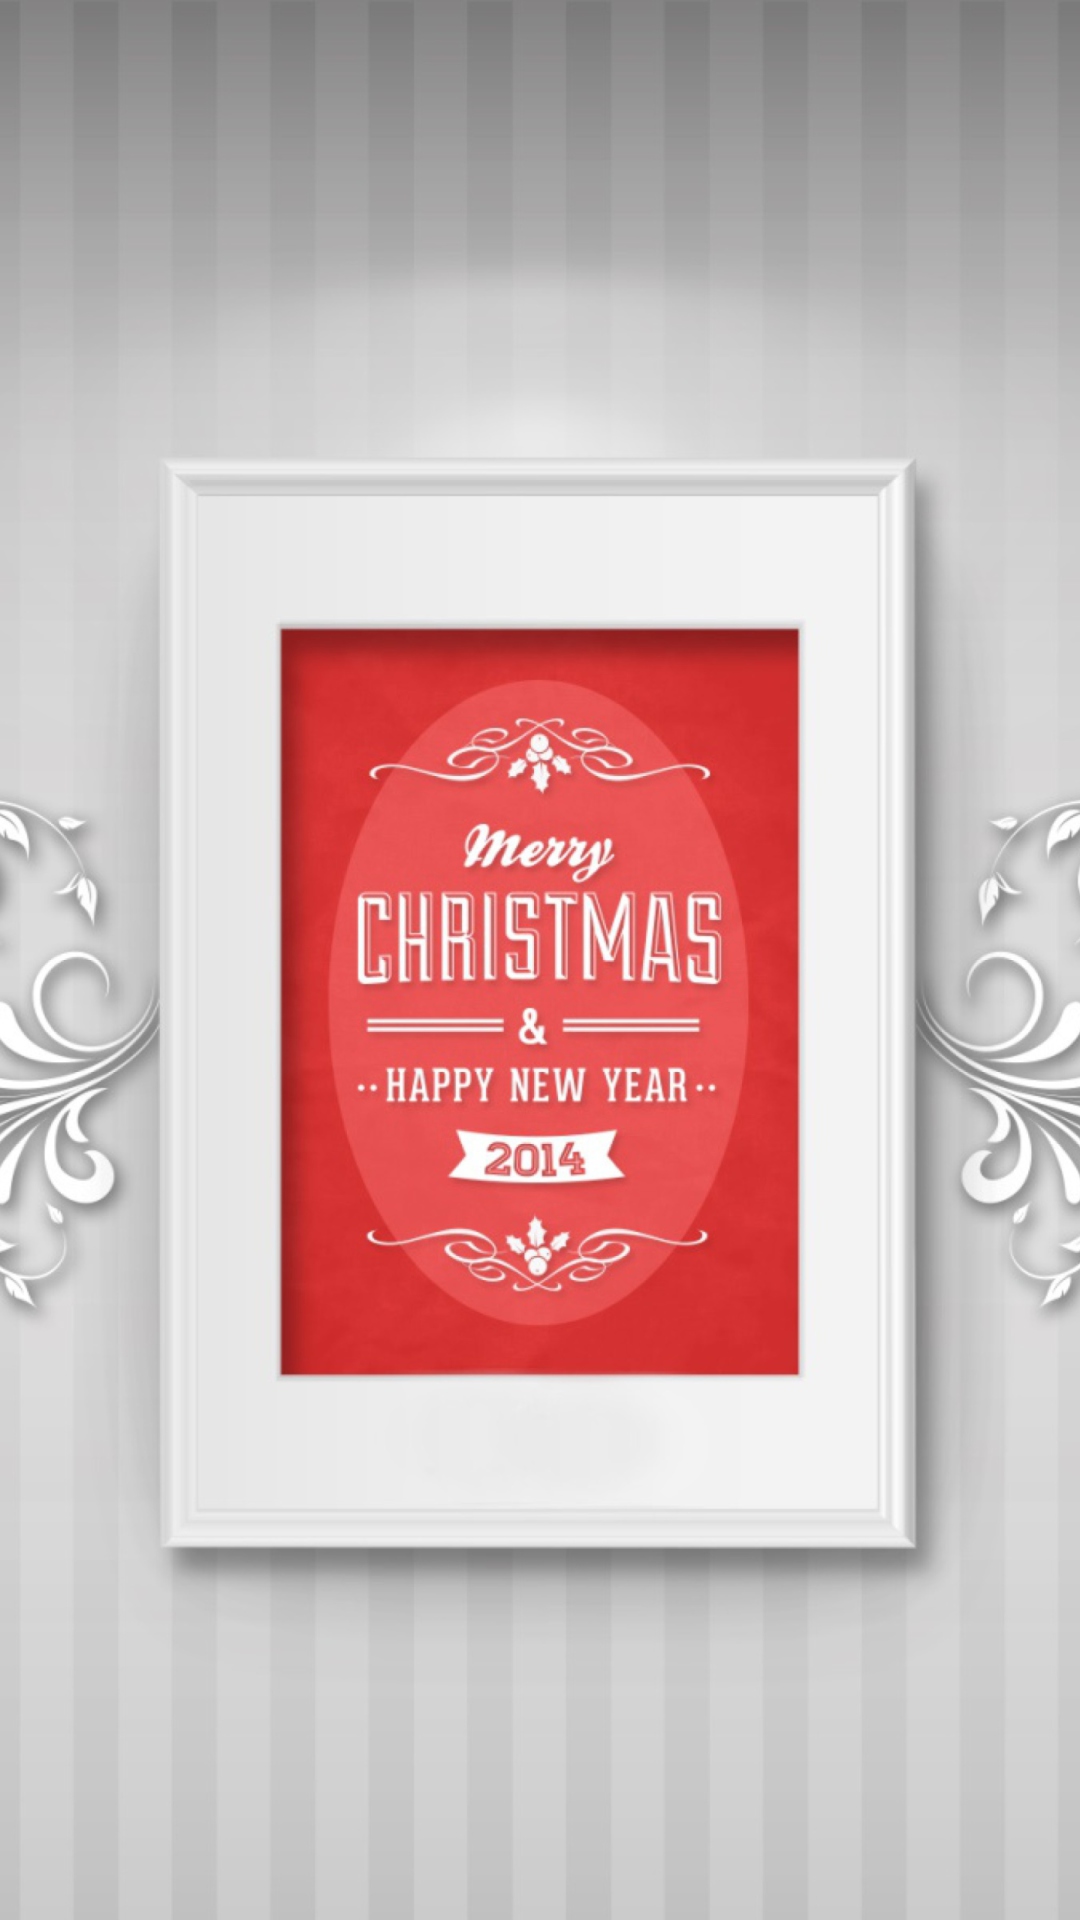 Merry Christmas & Happy New Year 2014 wallpaper 1080x1920